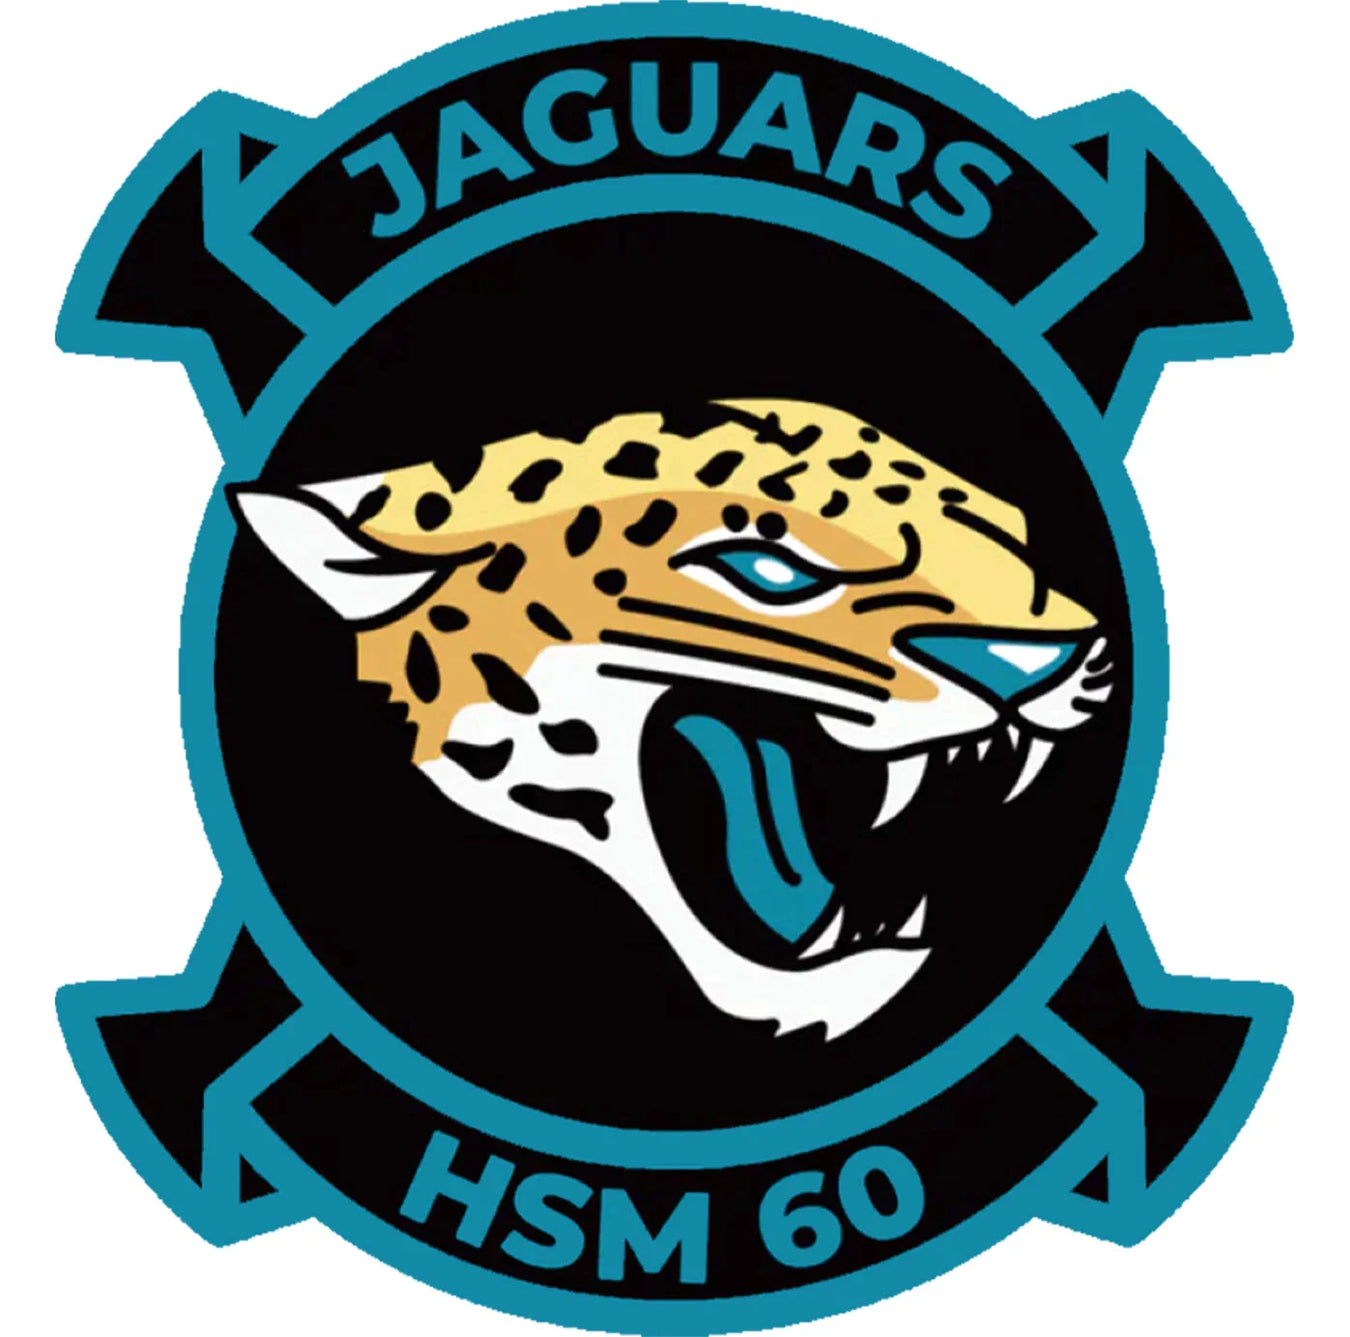 Helicopter Maritime Strike Squadron 60 (HSM-60) "Jaguars"